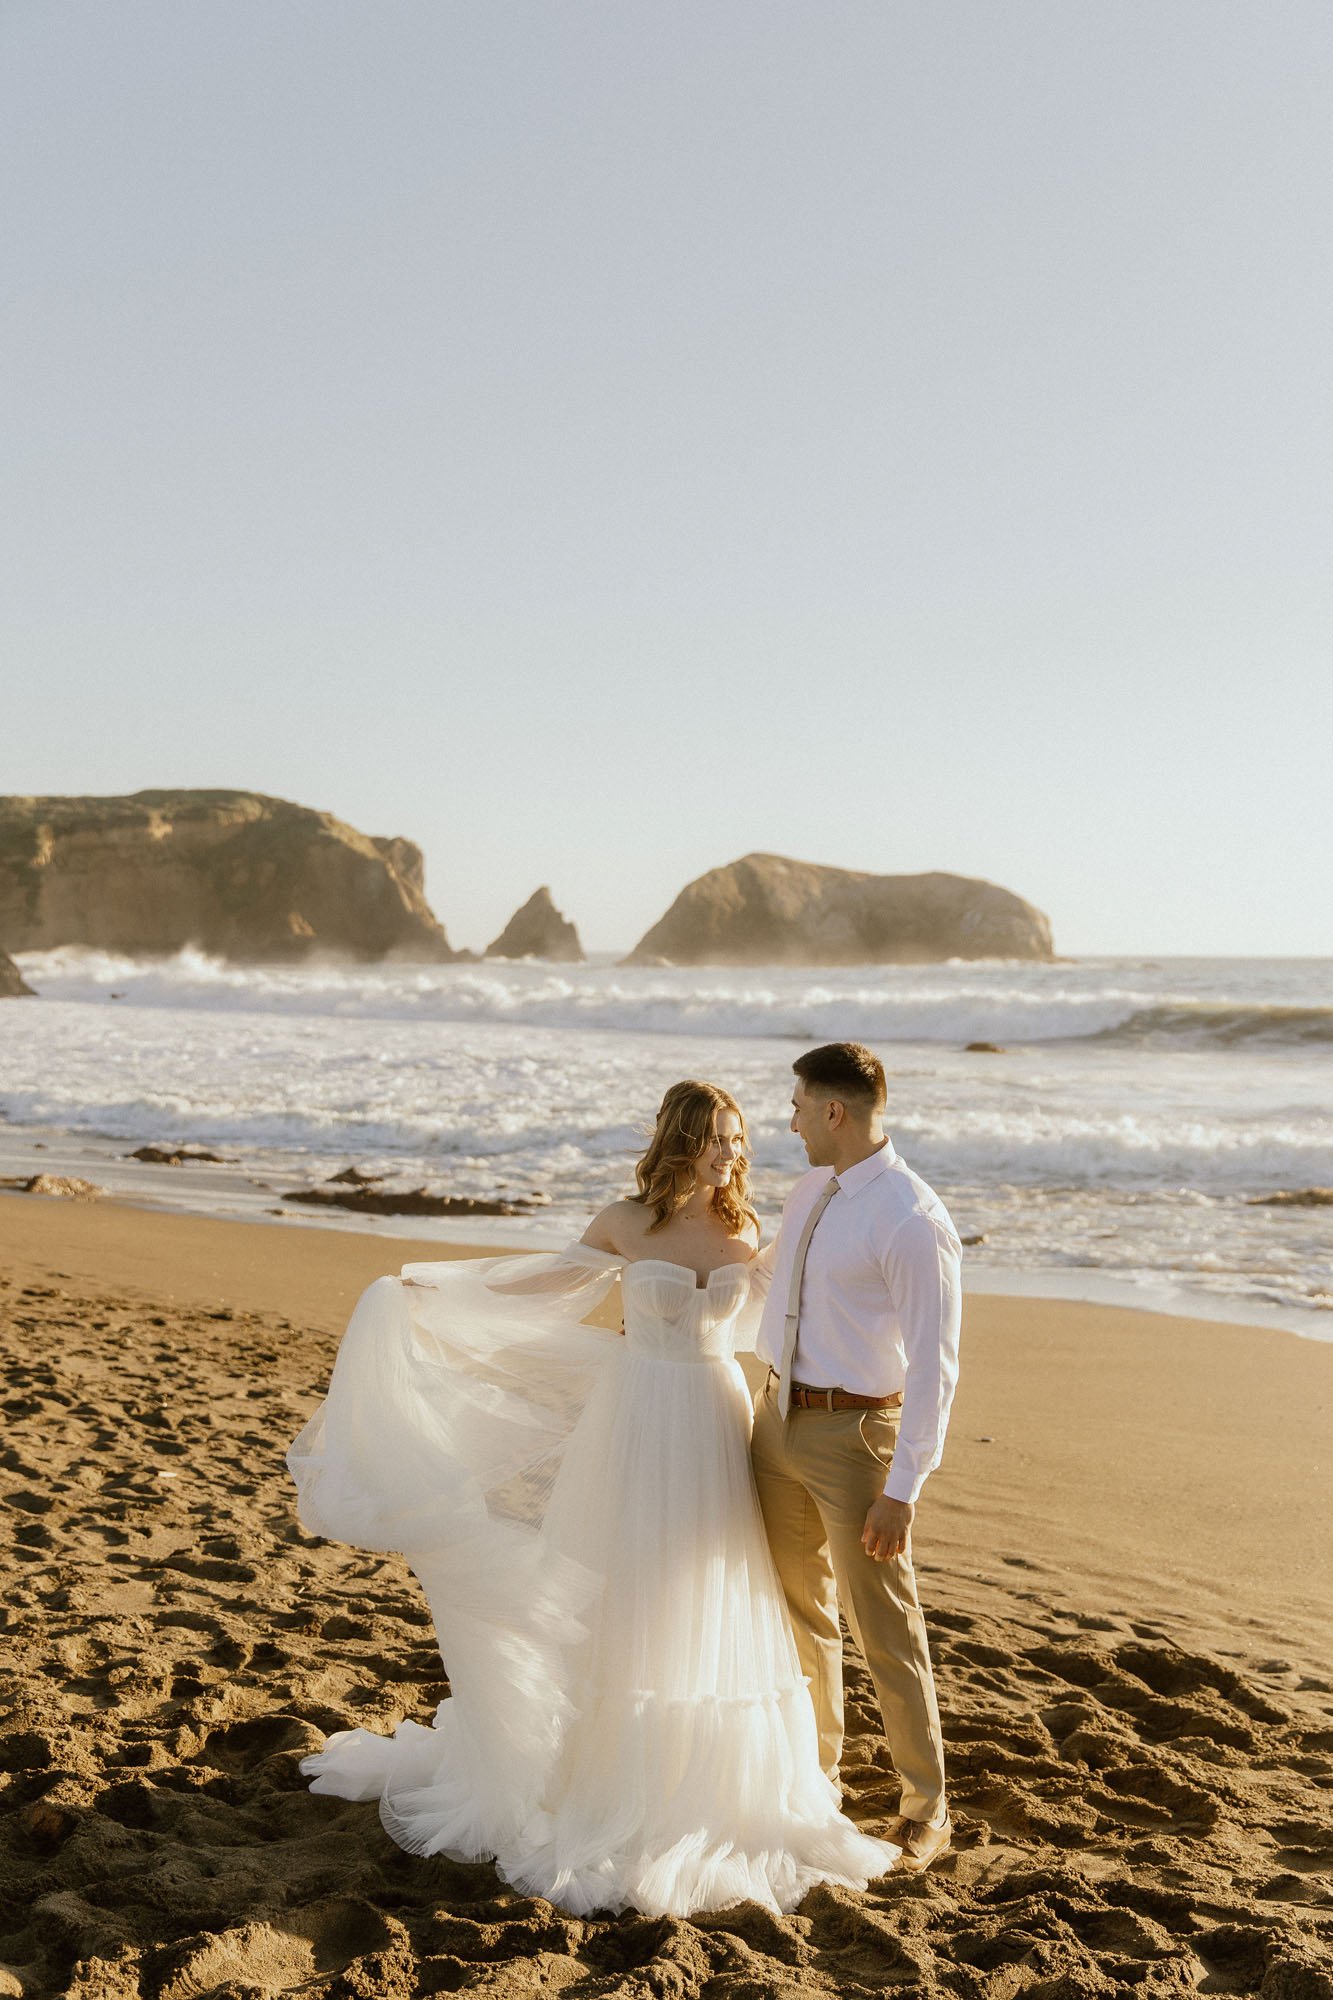 Alena-Leena-Armeria-Wedding-Dress-Rodeo-Beach-Elopement-13.jpg